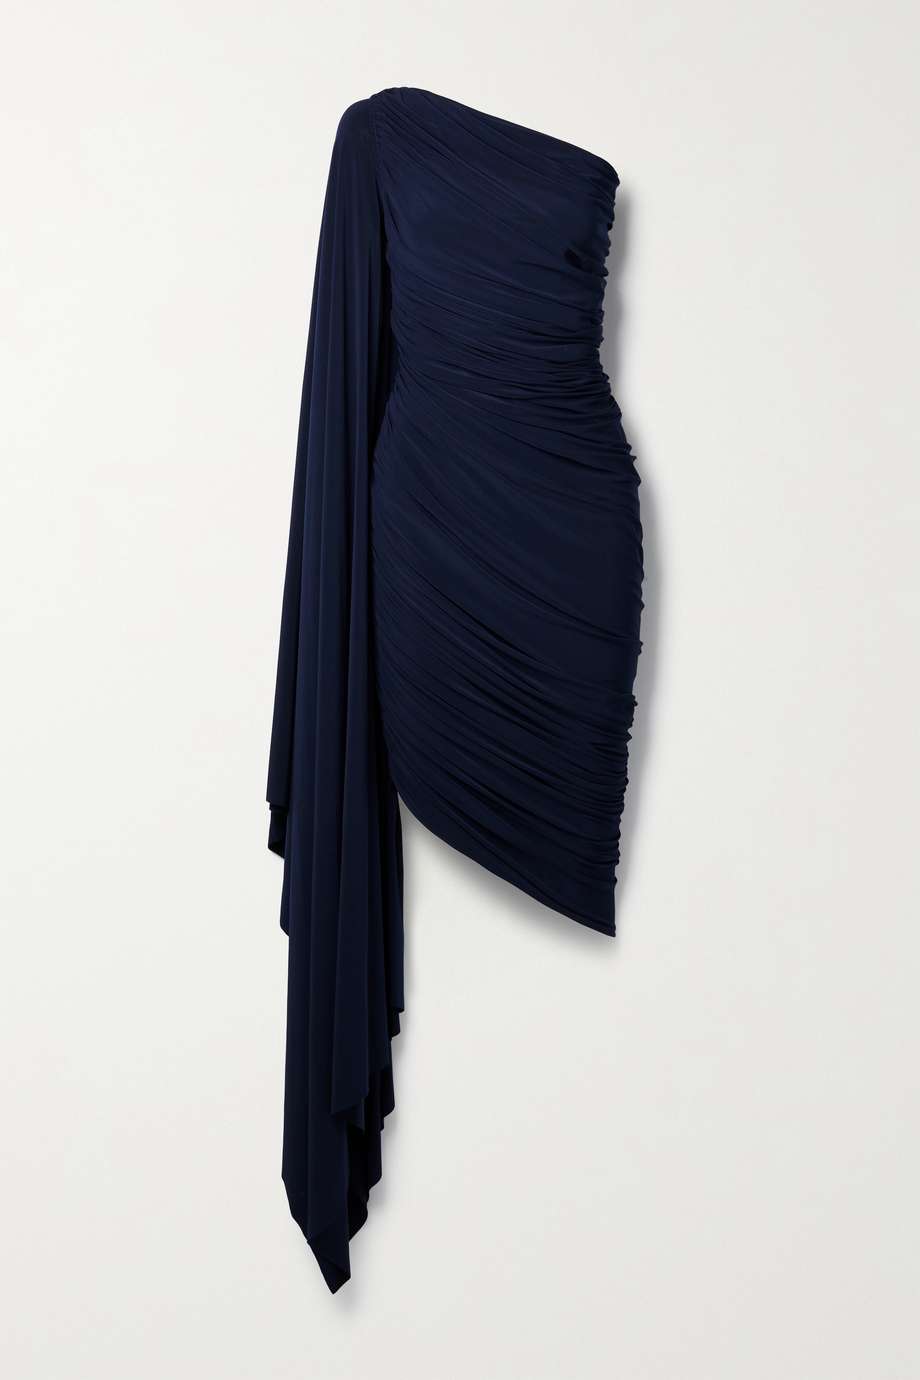 Norma Kamali Diana One-Sleeve Draped Ruched Stretch-Jersey Dress